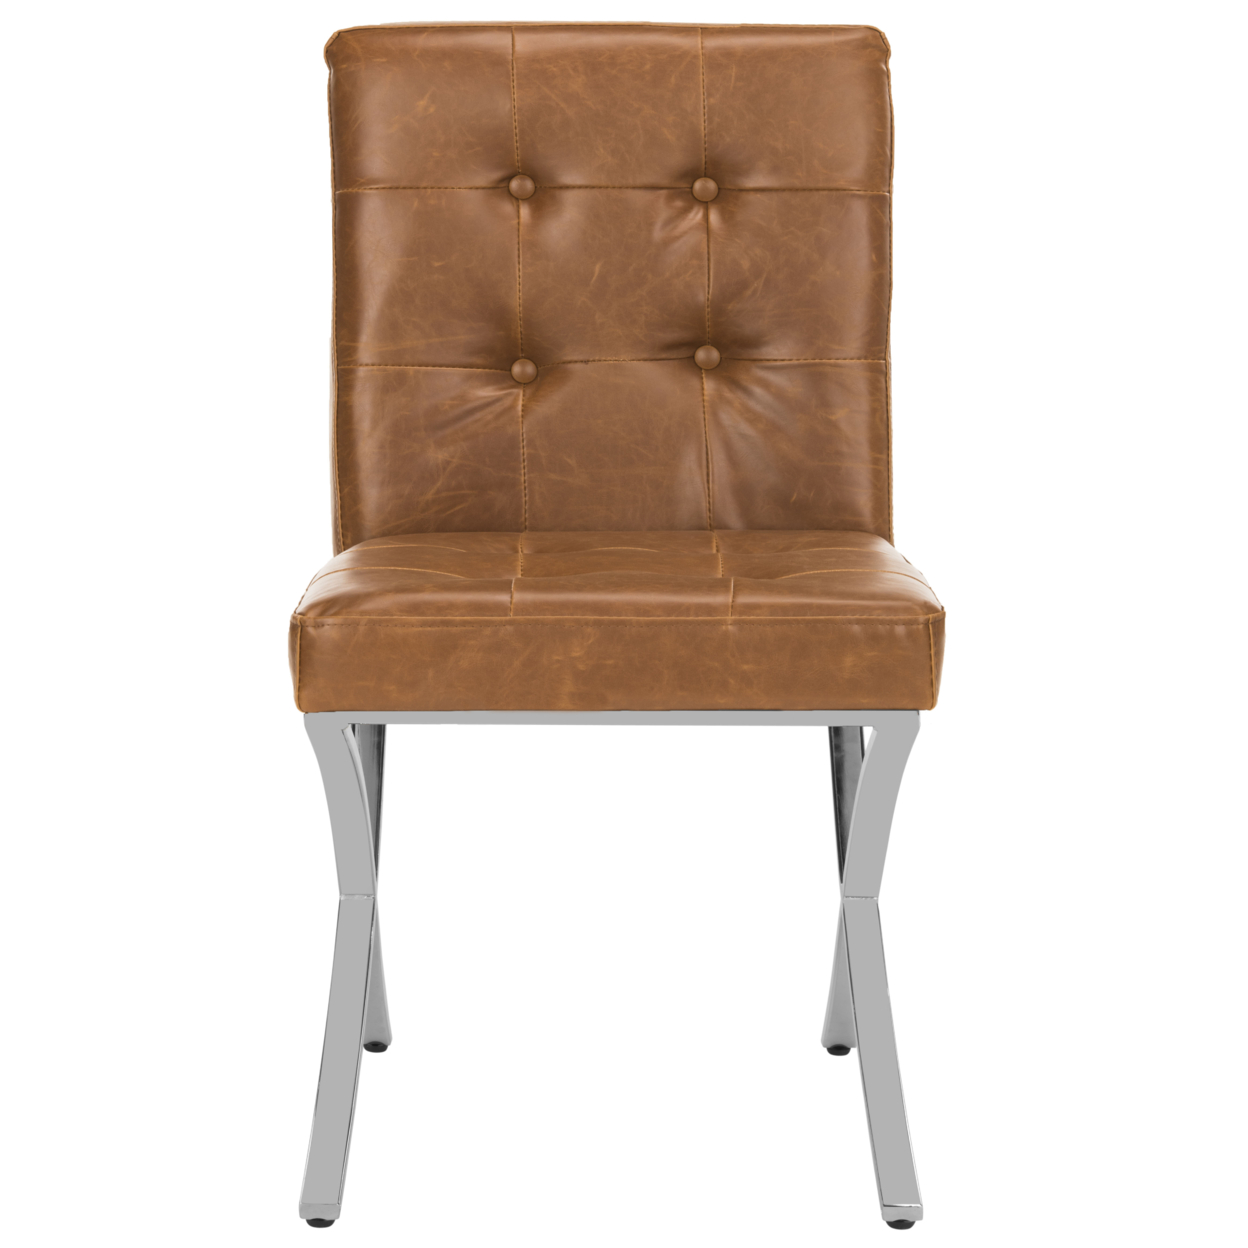 SAFAVIEH Walsh Tufted Side Chair Light Brown / Chrome